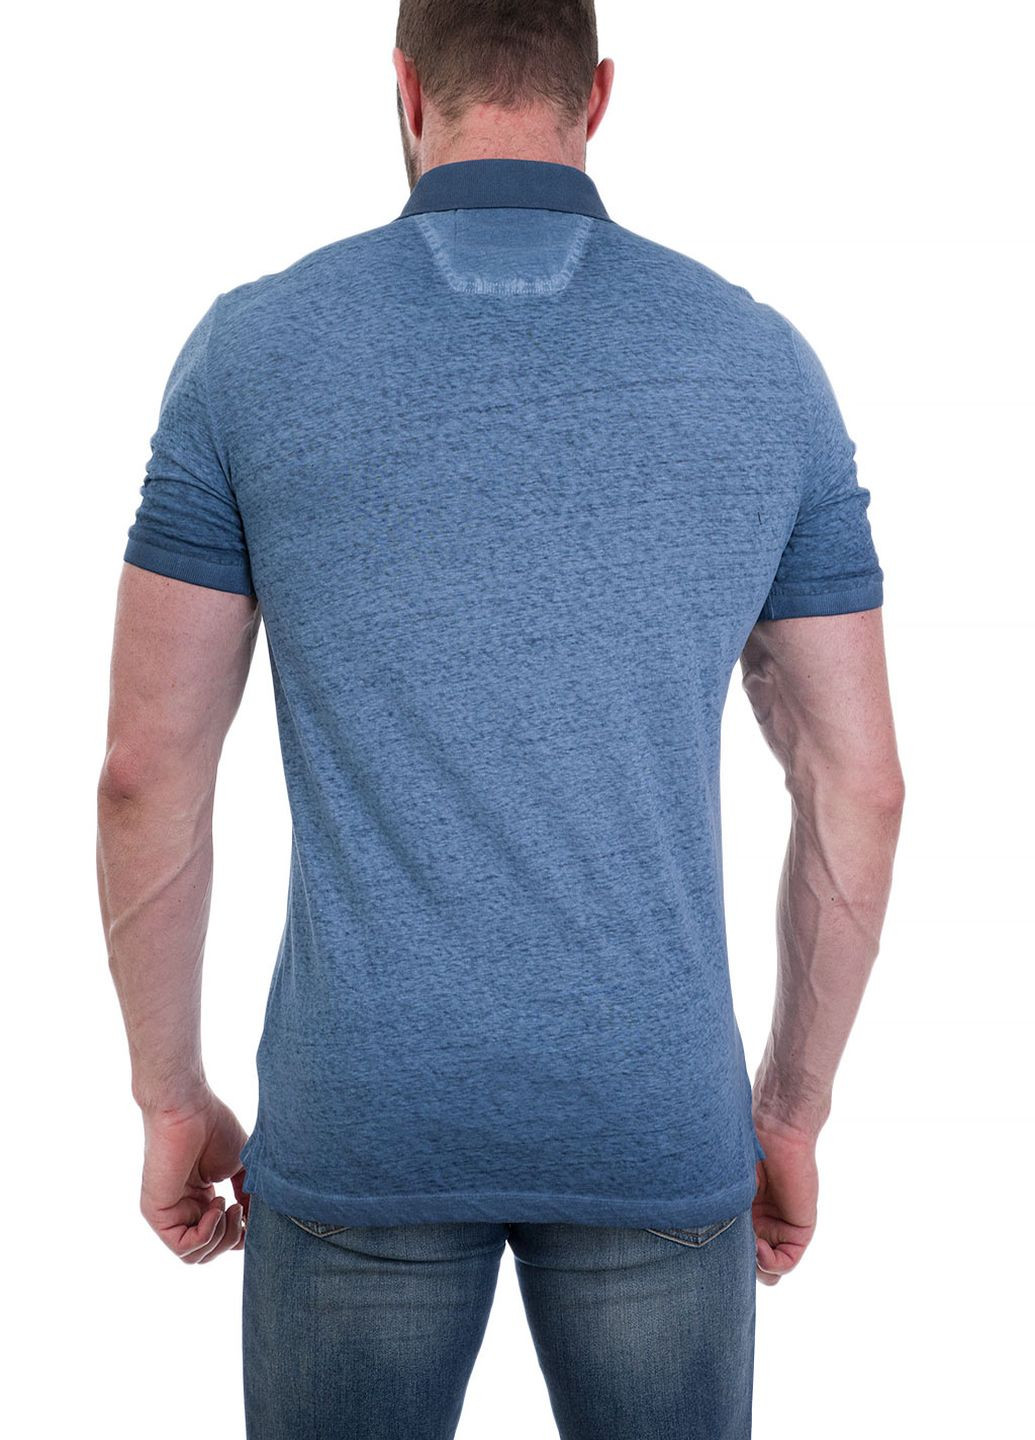 Голубой футболка-поло для мужчин Monte Carlo однотонная